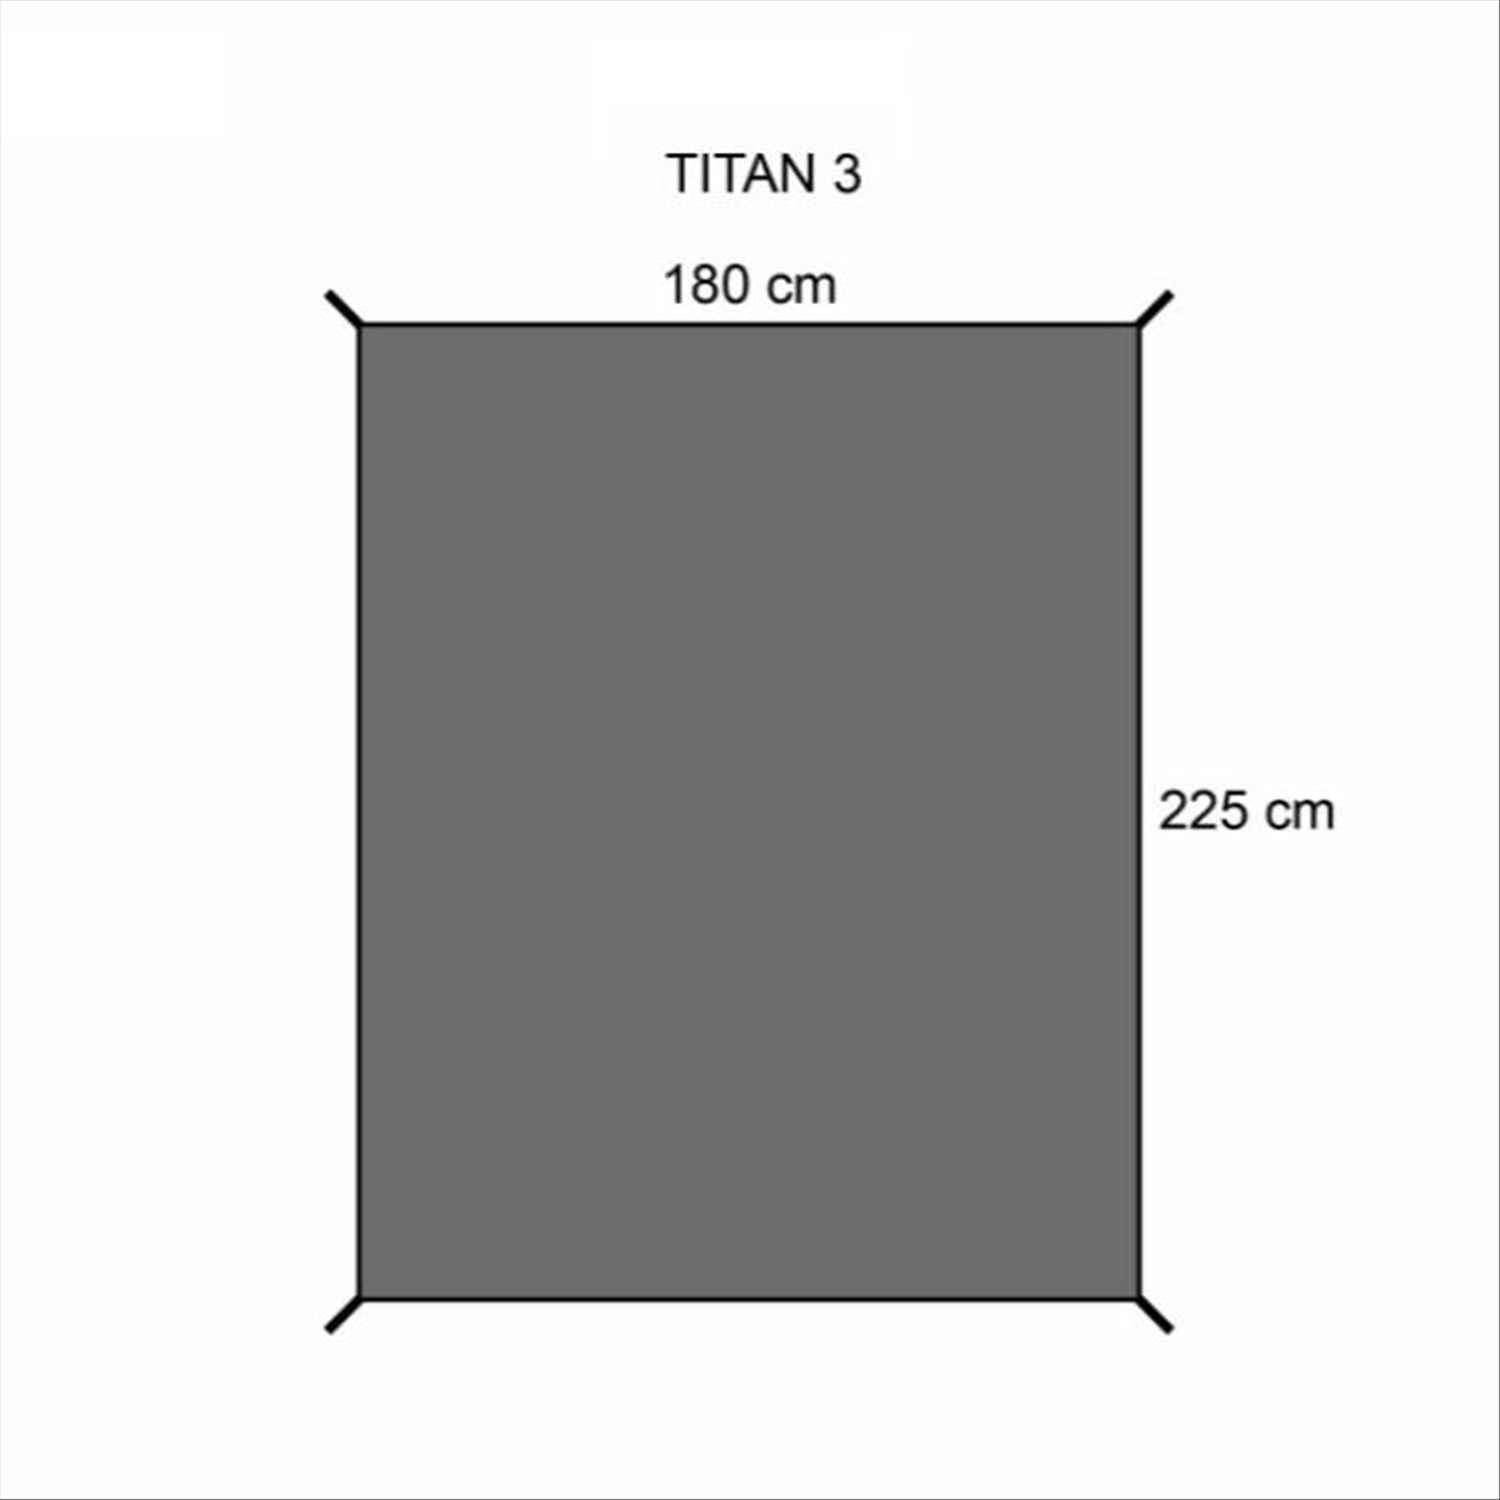 Intents Titan 3 Tent Groundsheet - 225 x 180cm